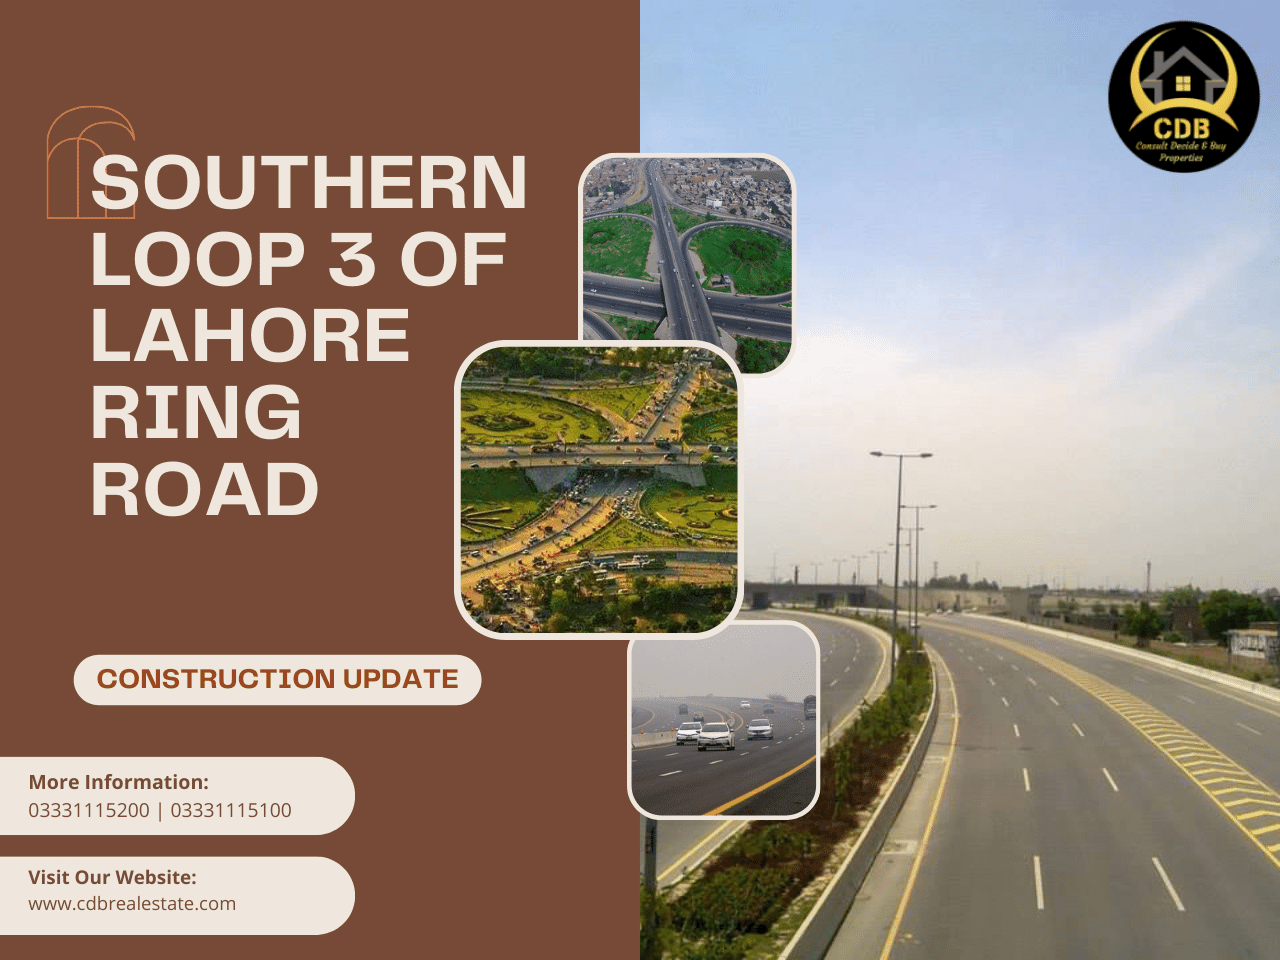 Southern Loop 3 of Lahore Ring Road